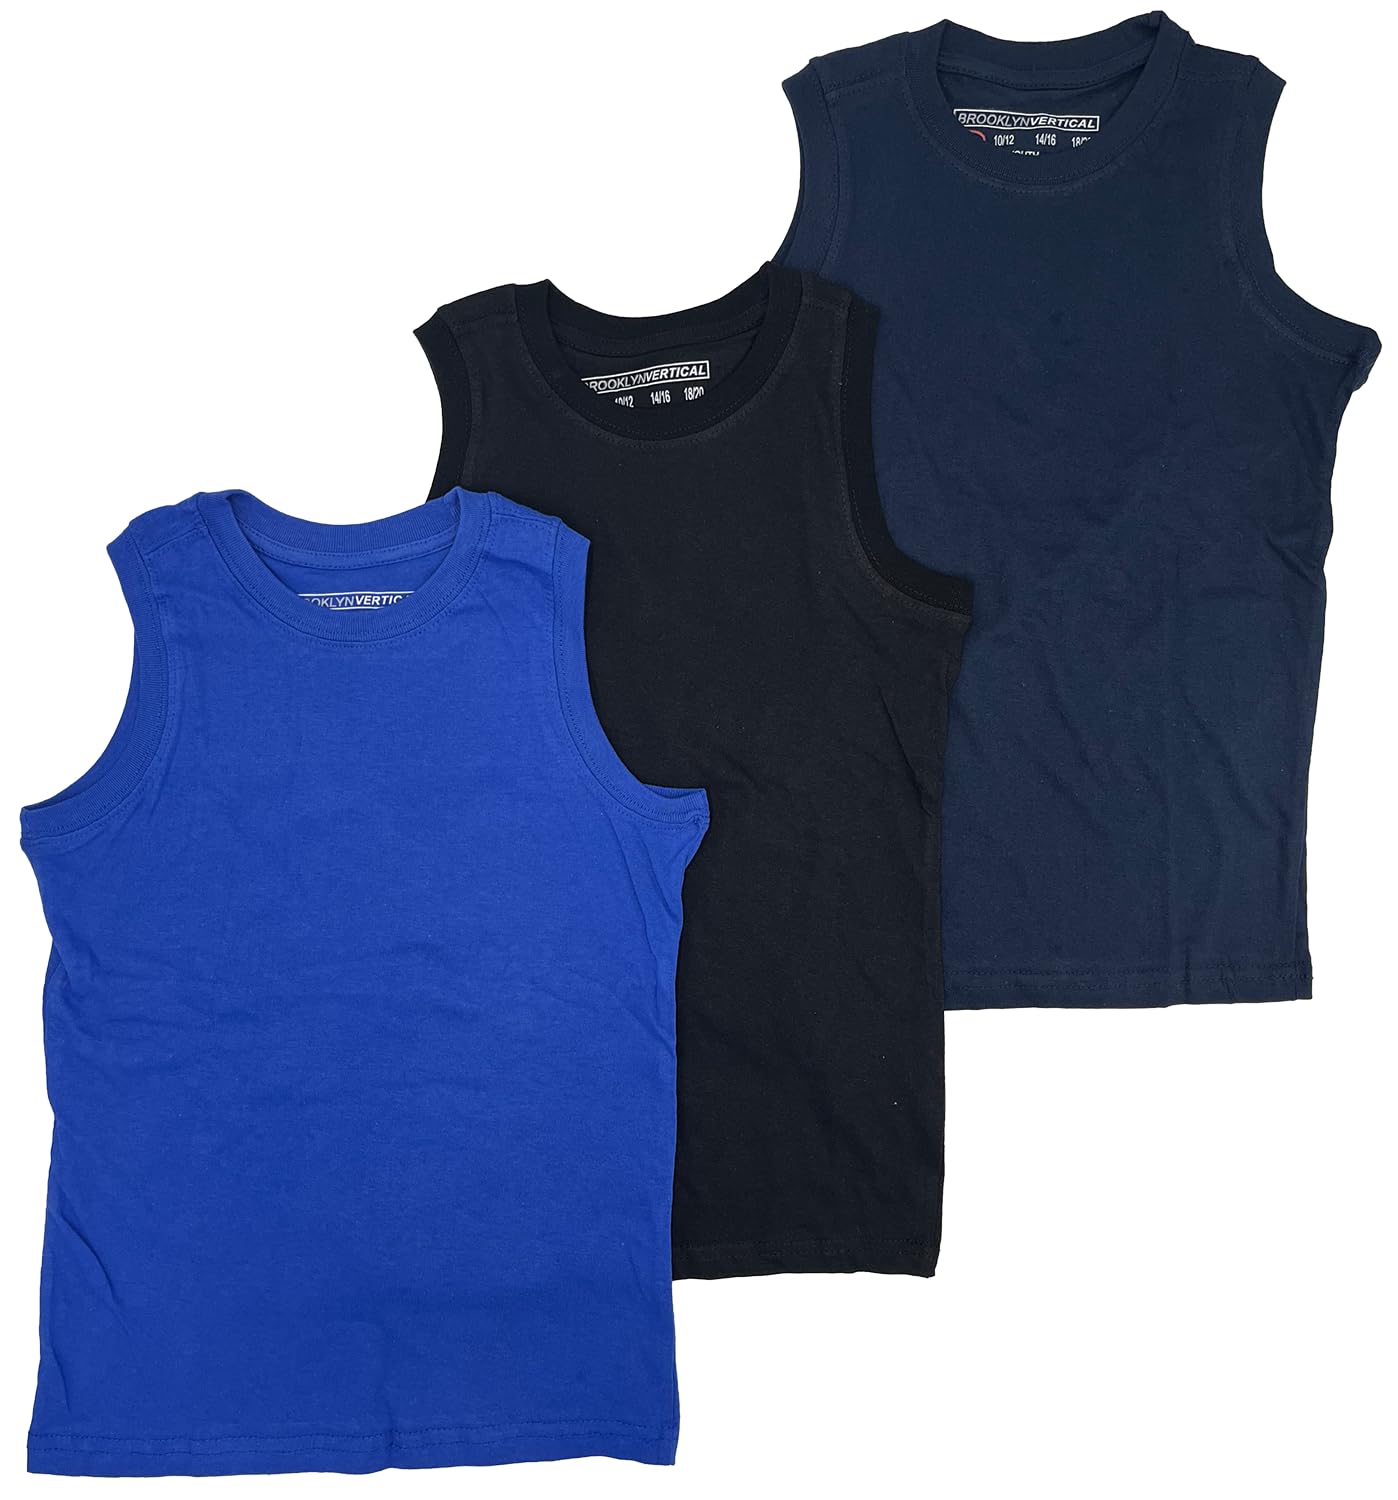 BROOKLYN VERTICAL Boys 3 Pack Muscle Shirt Sleeveless Tee - Tagless Cotton Super Soft